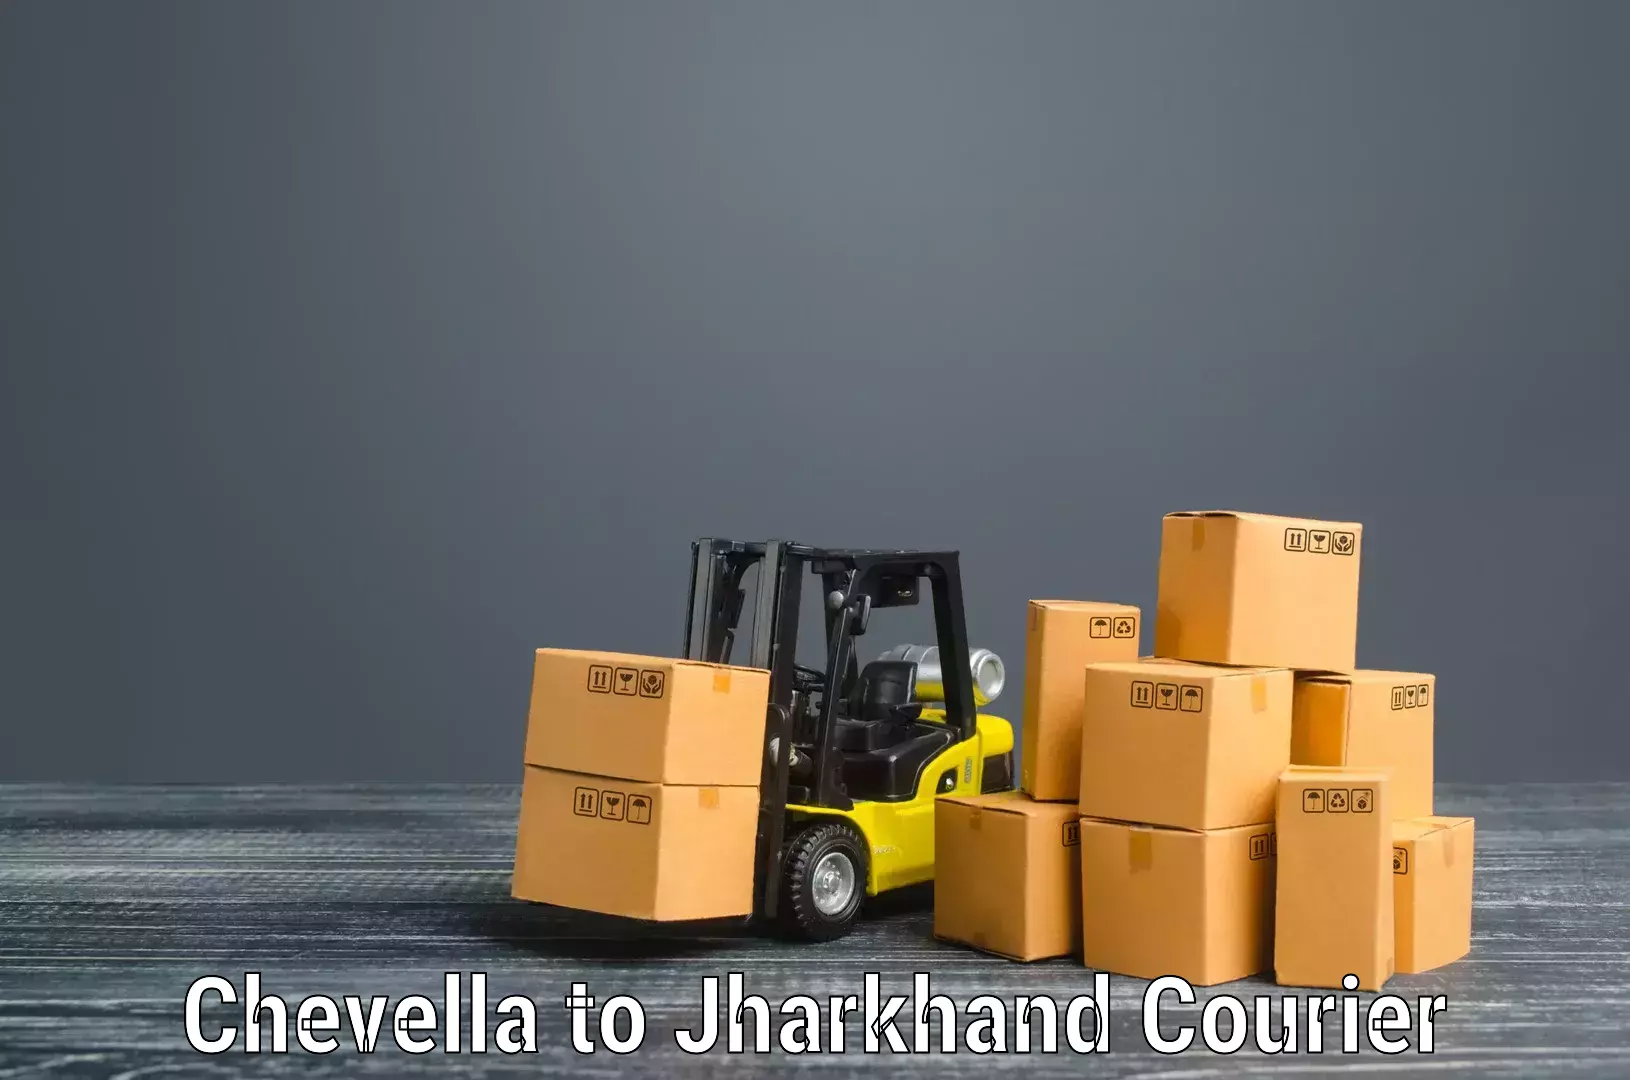 Efficient moving company Chevella to Dhalbhumgarh